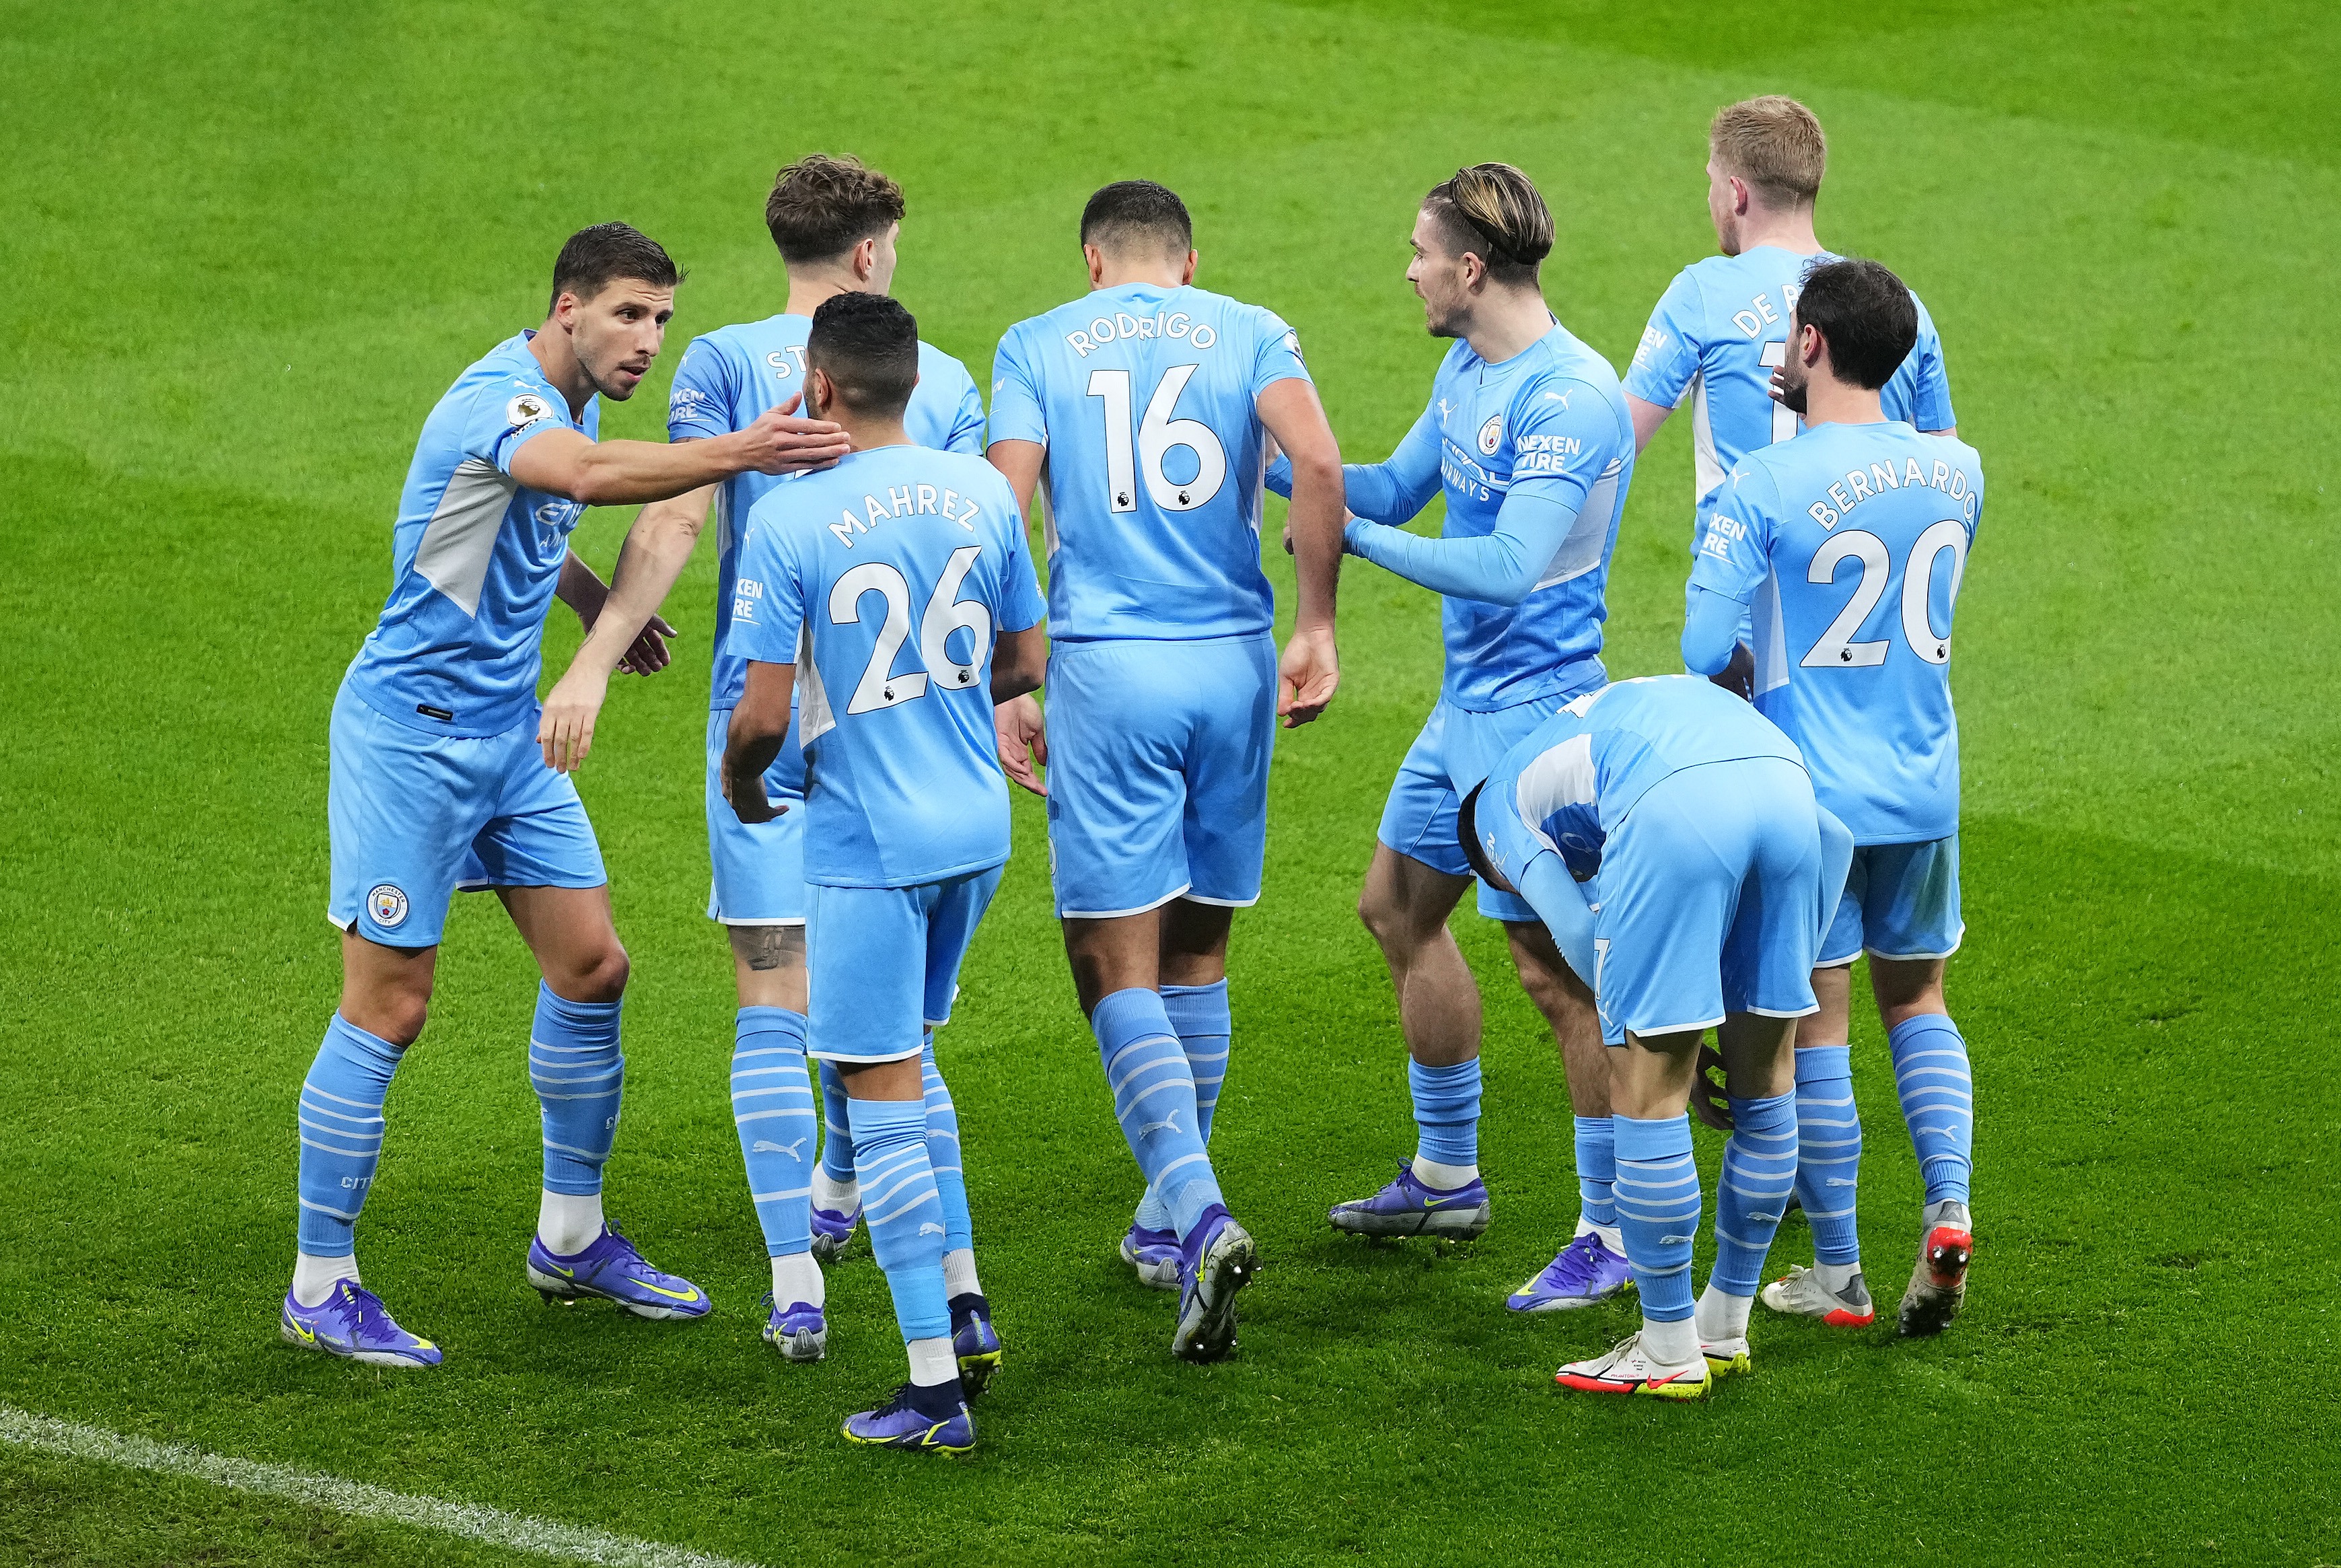 Manchester City goal celebration